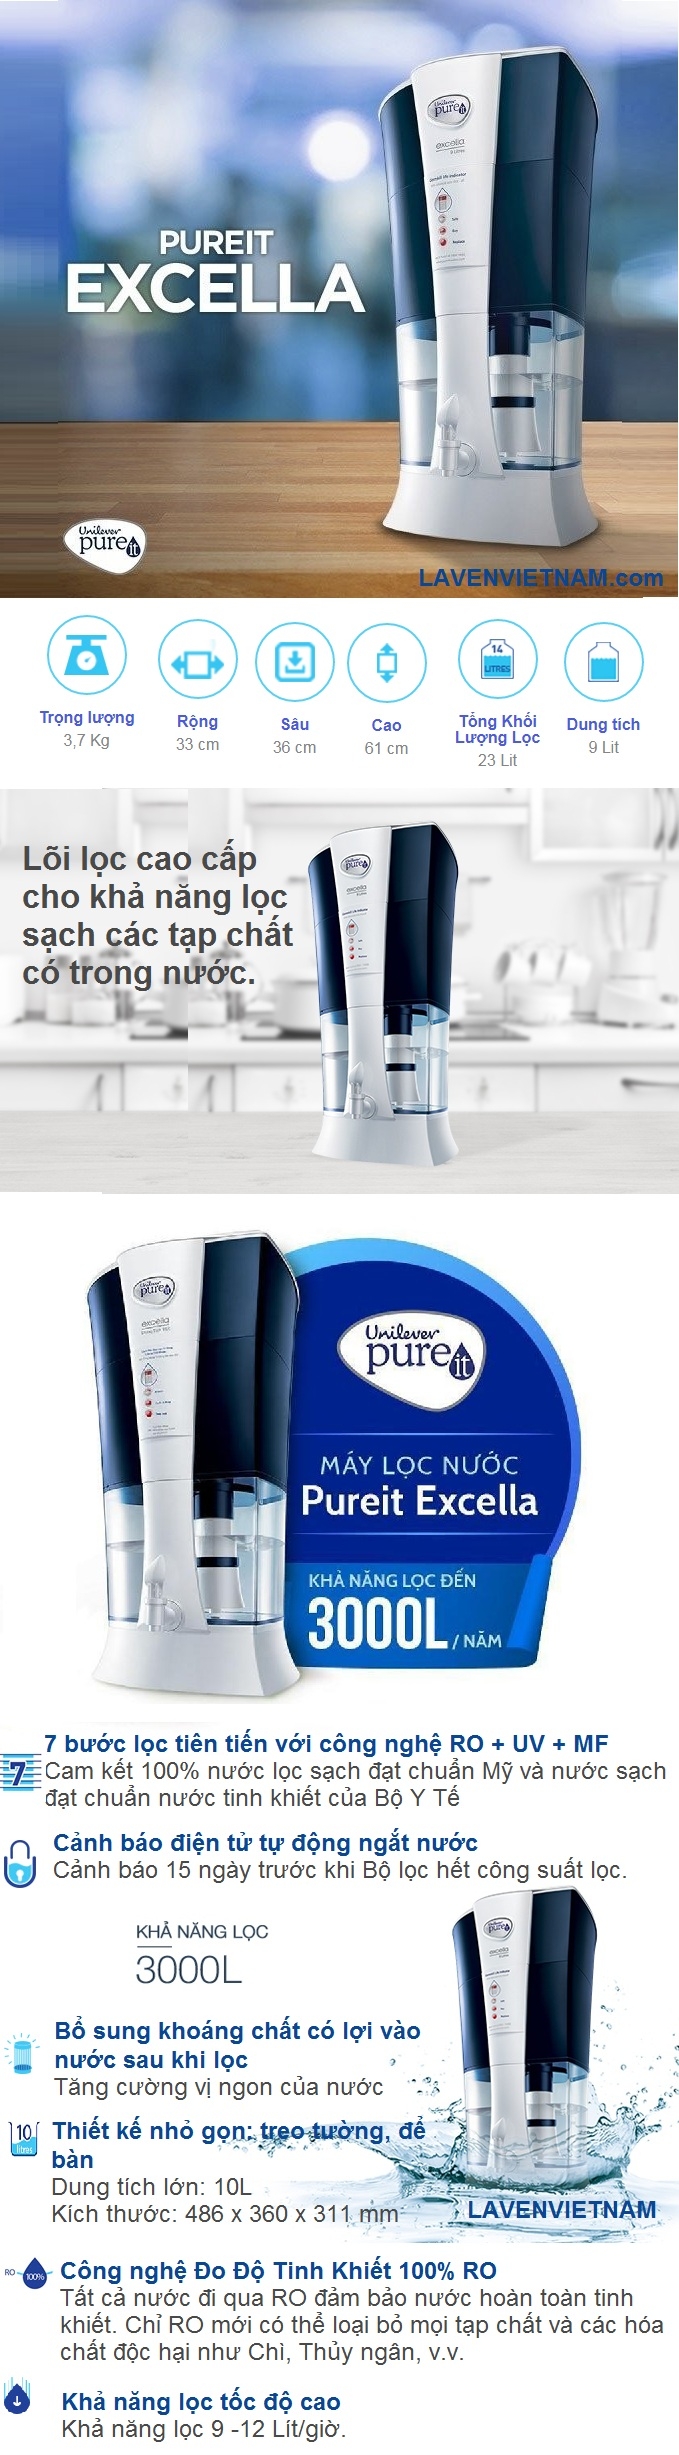 Máy lọc nước Pureit Unilever Excella 9 lít